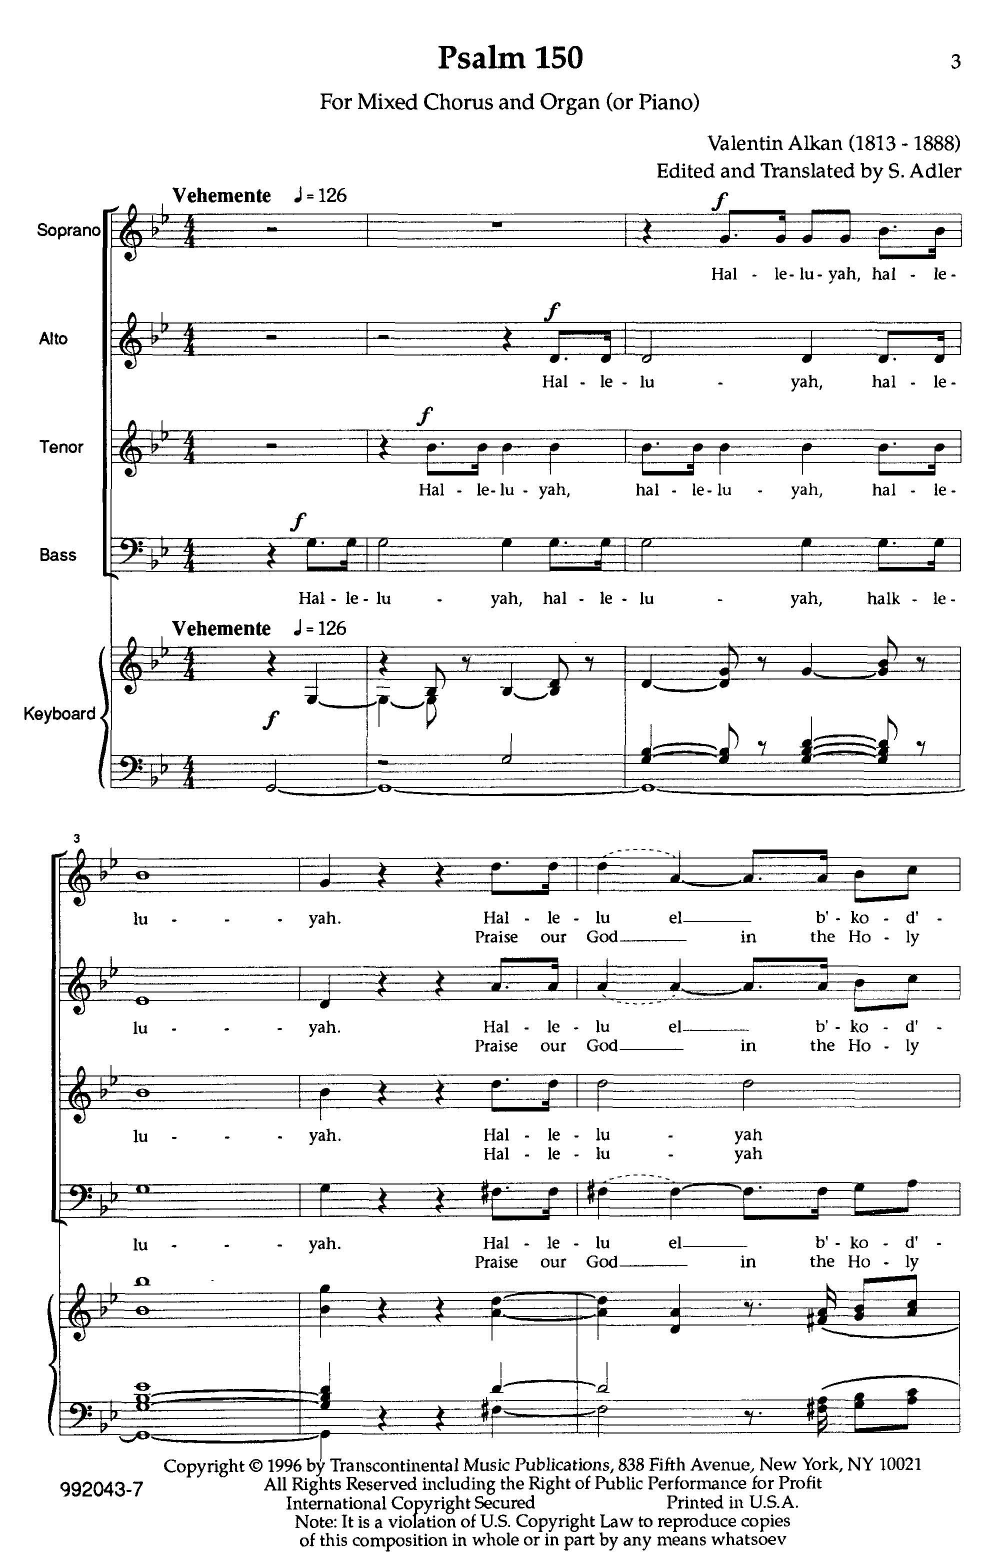 Samuel Adler Hallelujah (Psalm 150) Sheet Music Notes & Chords for SATB - Download or Print PDF